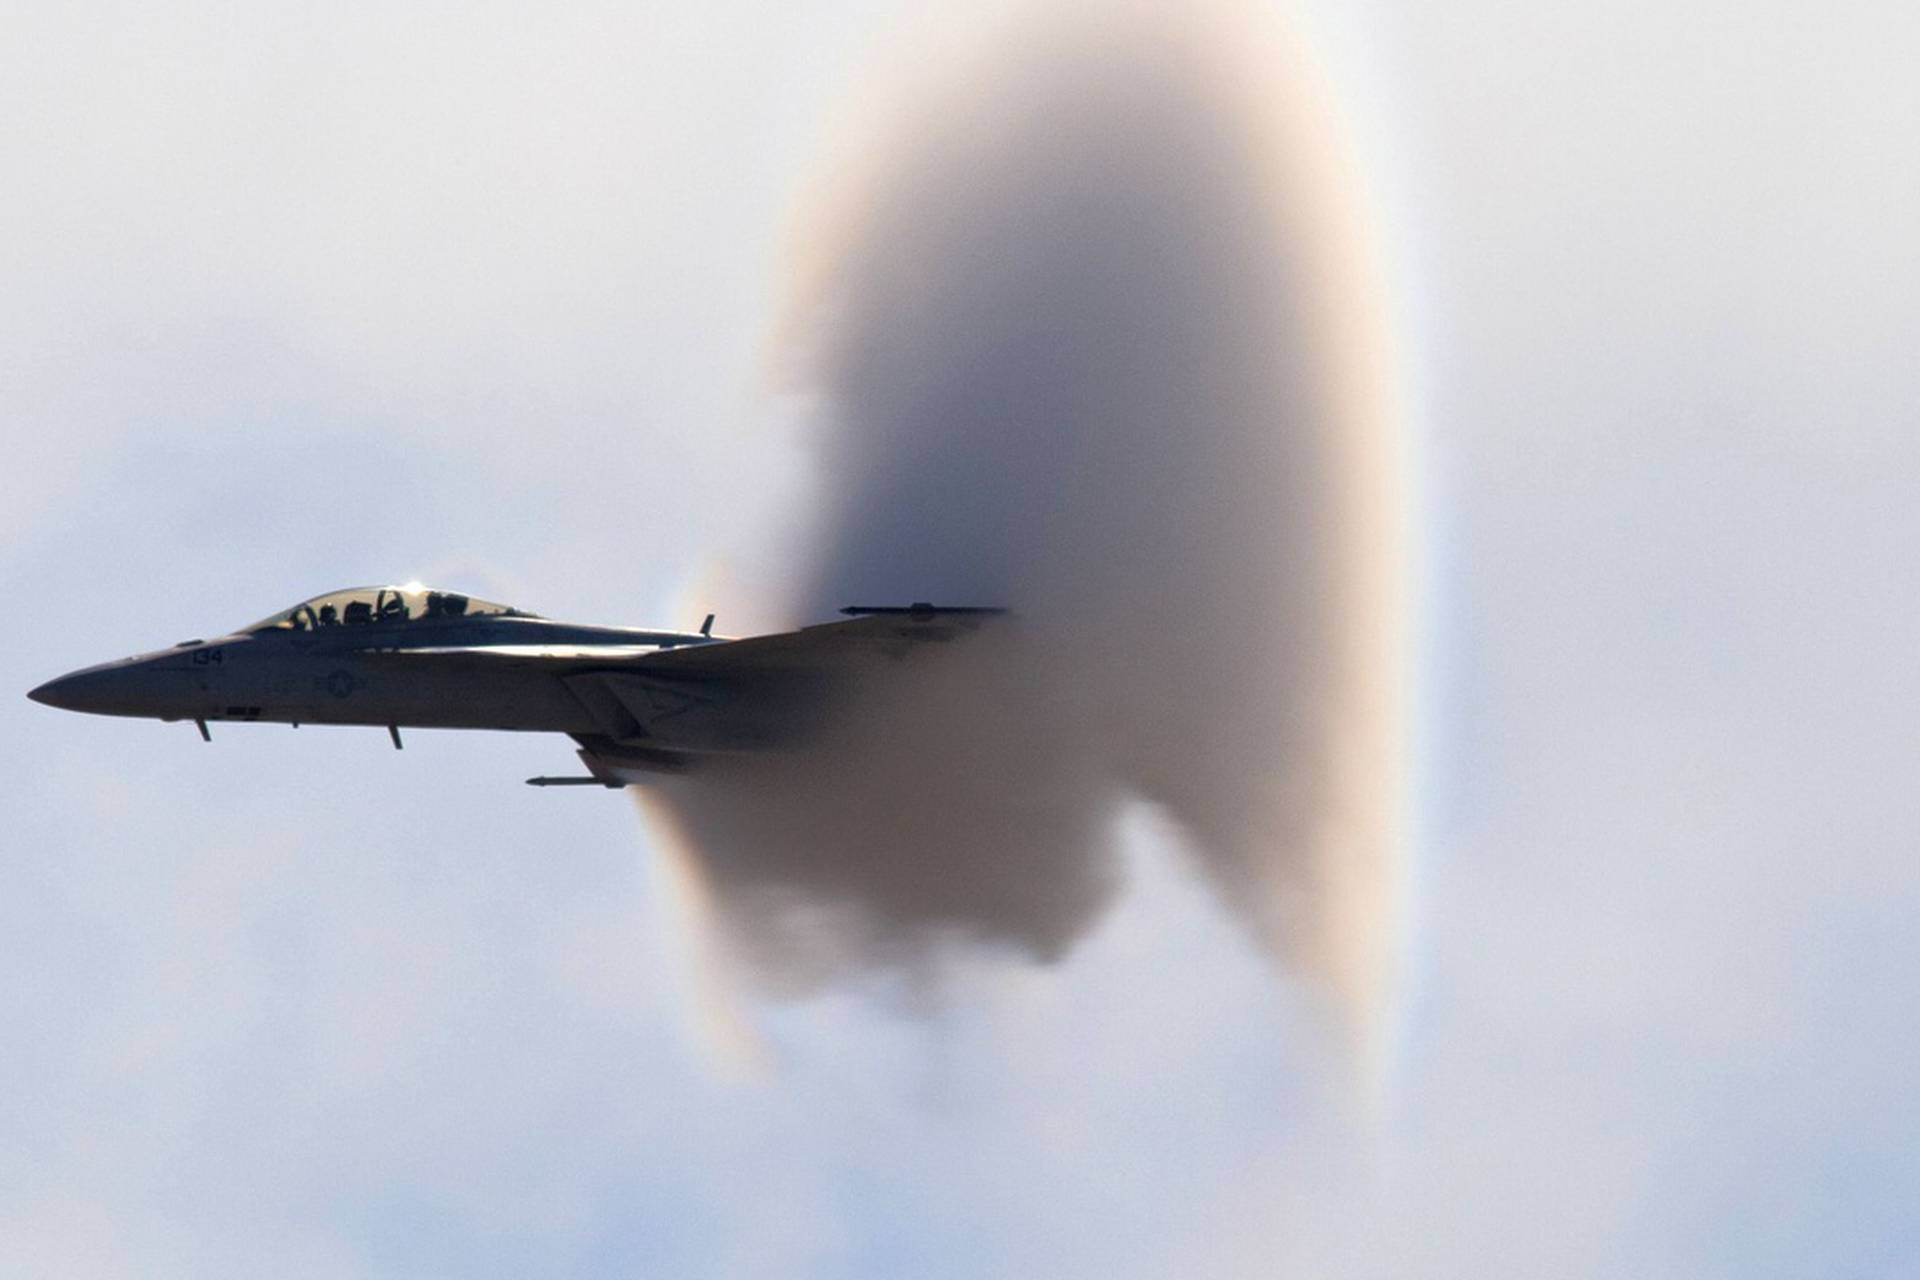 F-18 Super Hornet supersonic jet creates conical vapour trail as it breaks sound barrier, San Diego, California, America - 21 Jan 2011